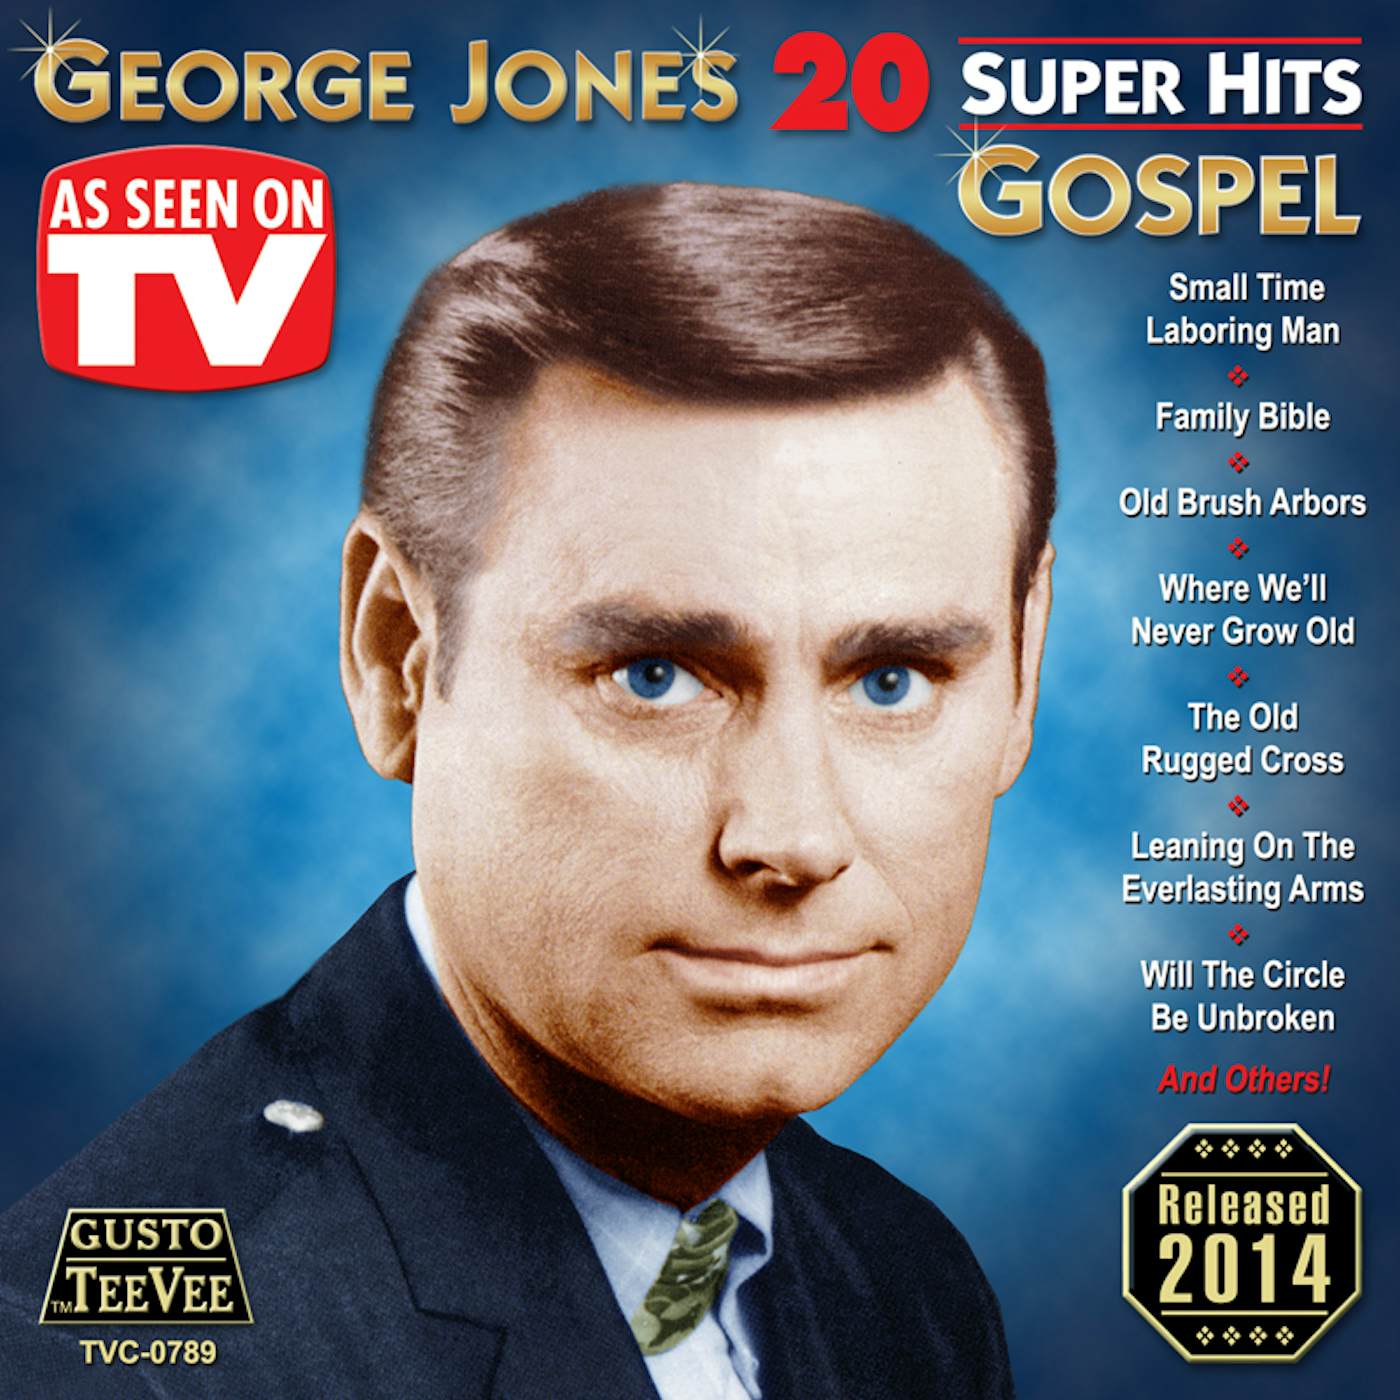 George Jones 20 SUPER HITS GOSPEL CD